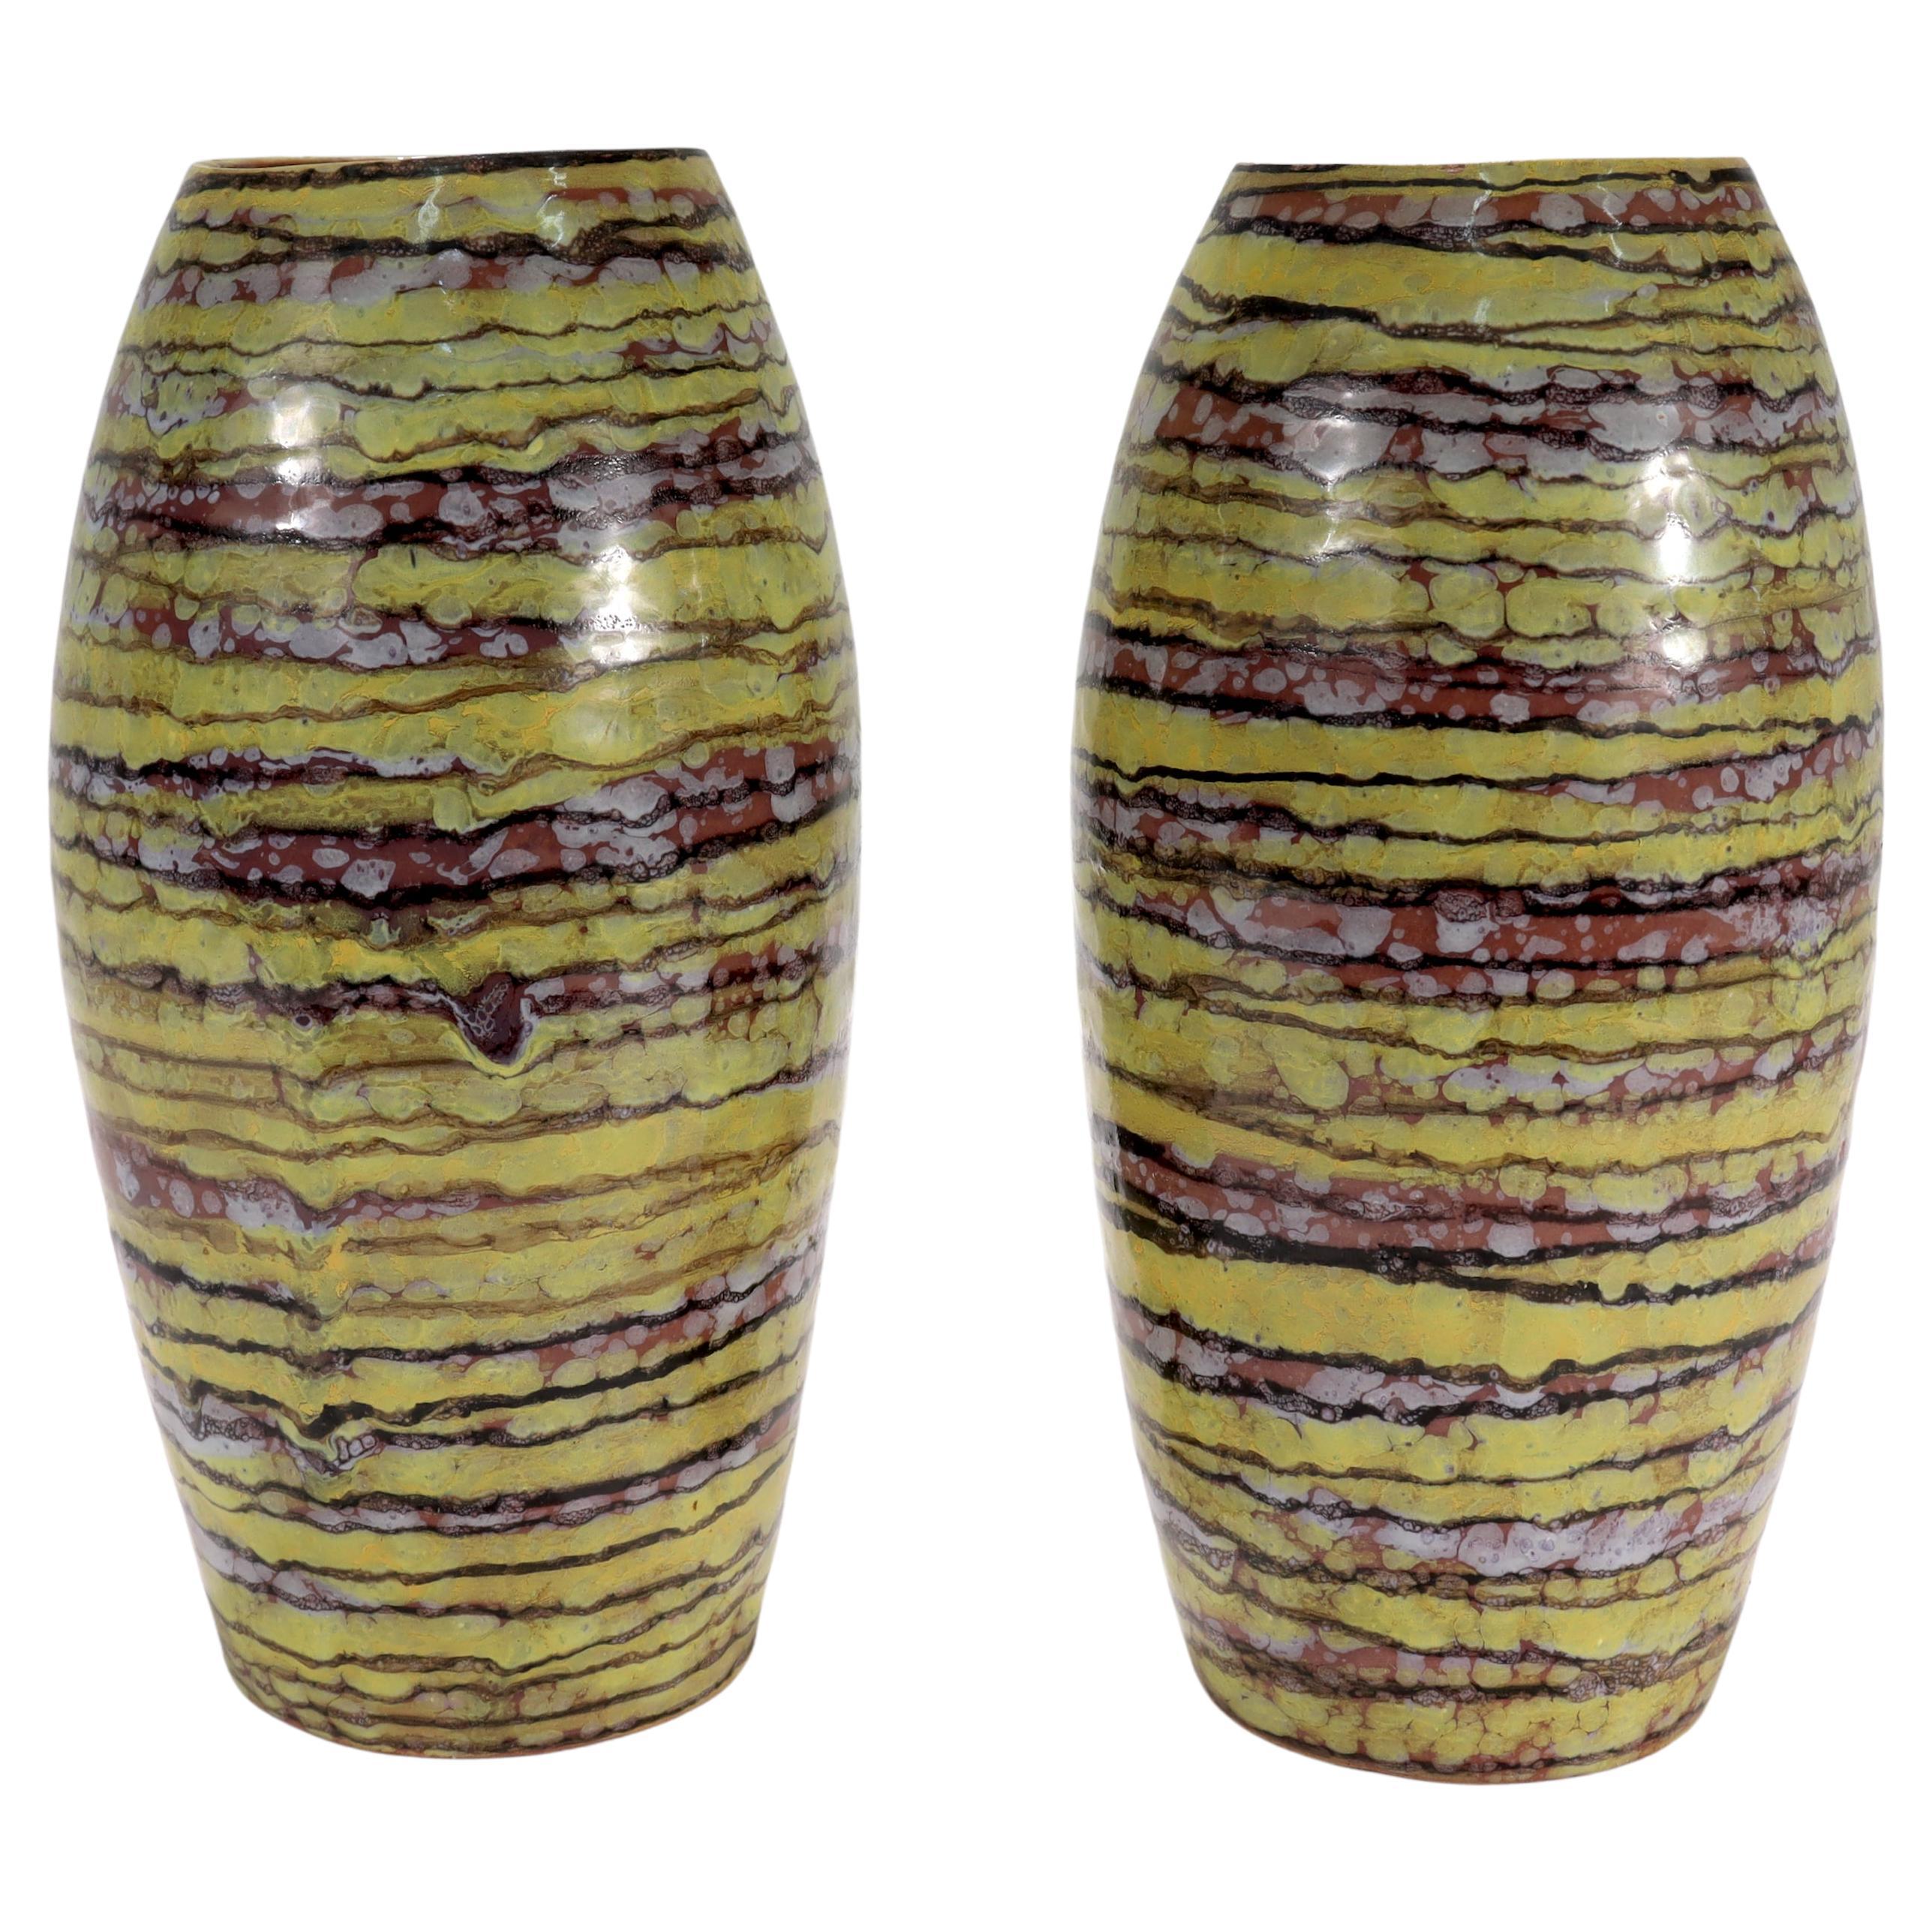 Pair of Italian Mid-Century Modern Striped Terracotta Pottery Vases 